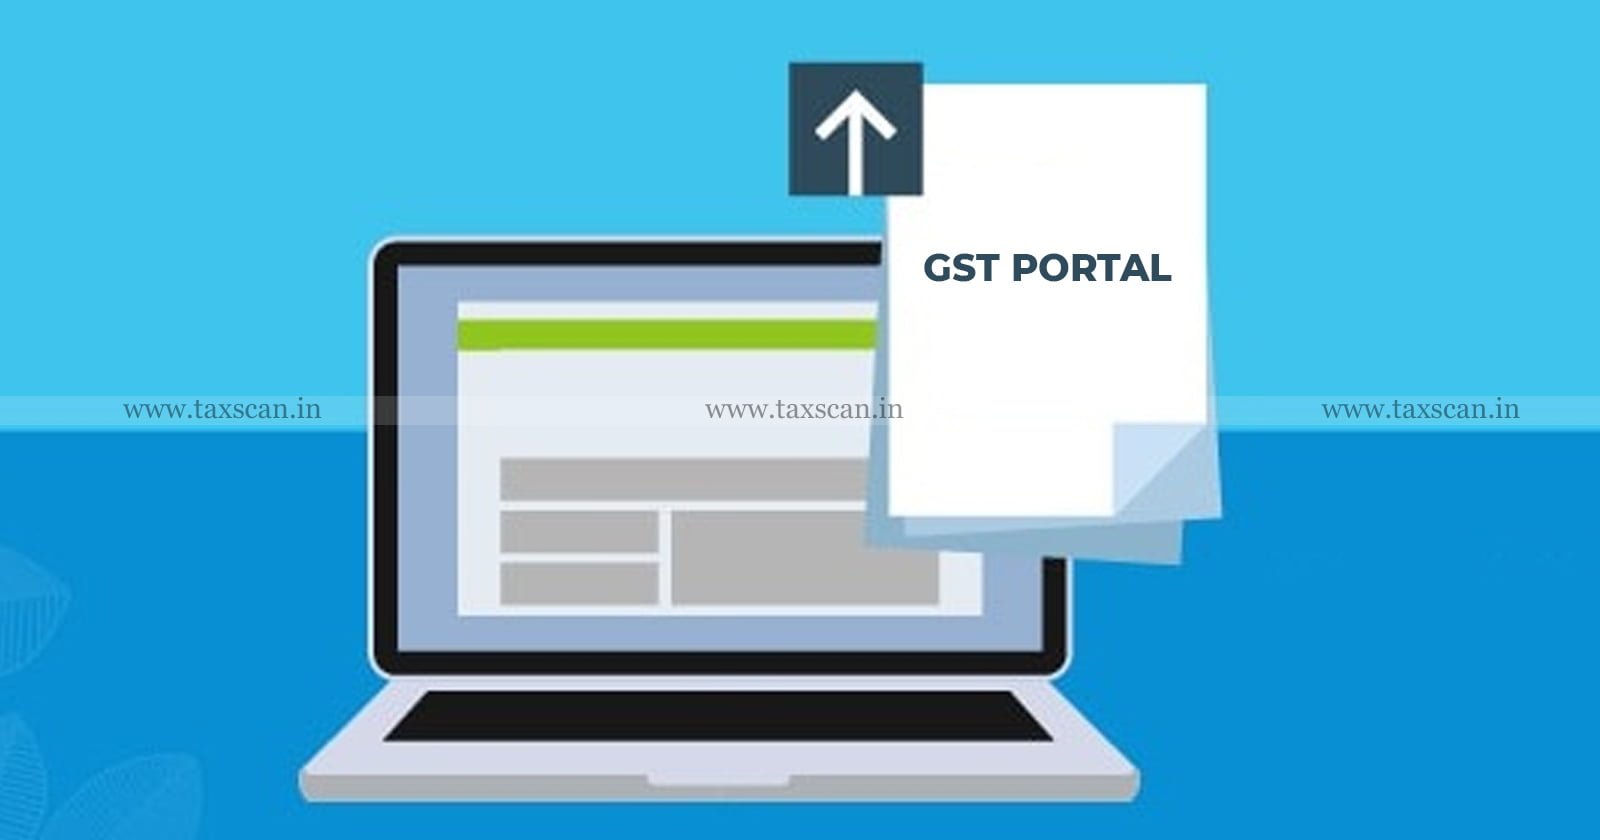 Allegation - Assessment Order - Non-Signed Assessment Order - Allegation of uploading of Non-Signed Assessment Order - GST Portal - Kerala HC - taxscan